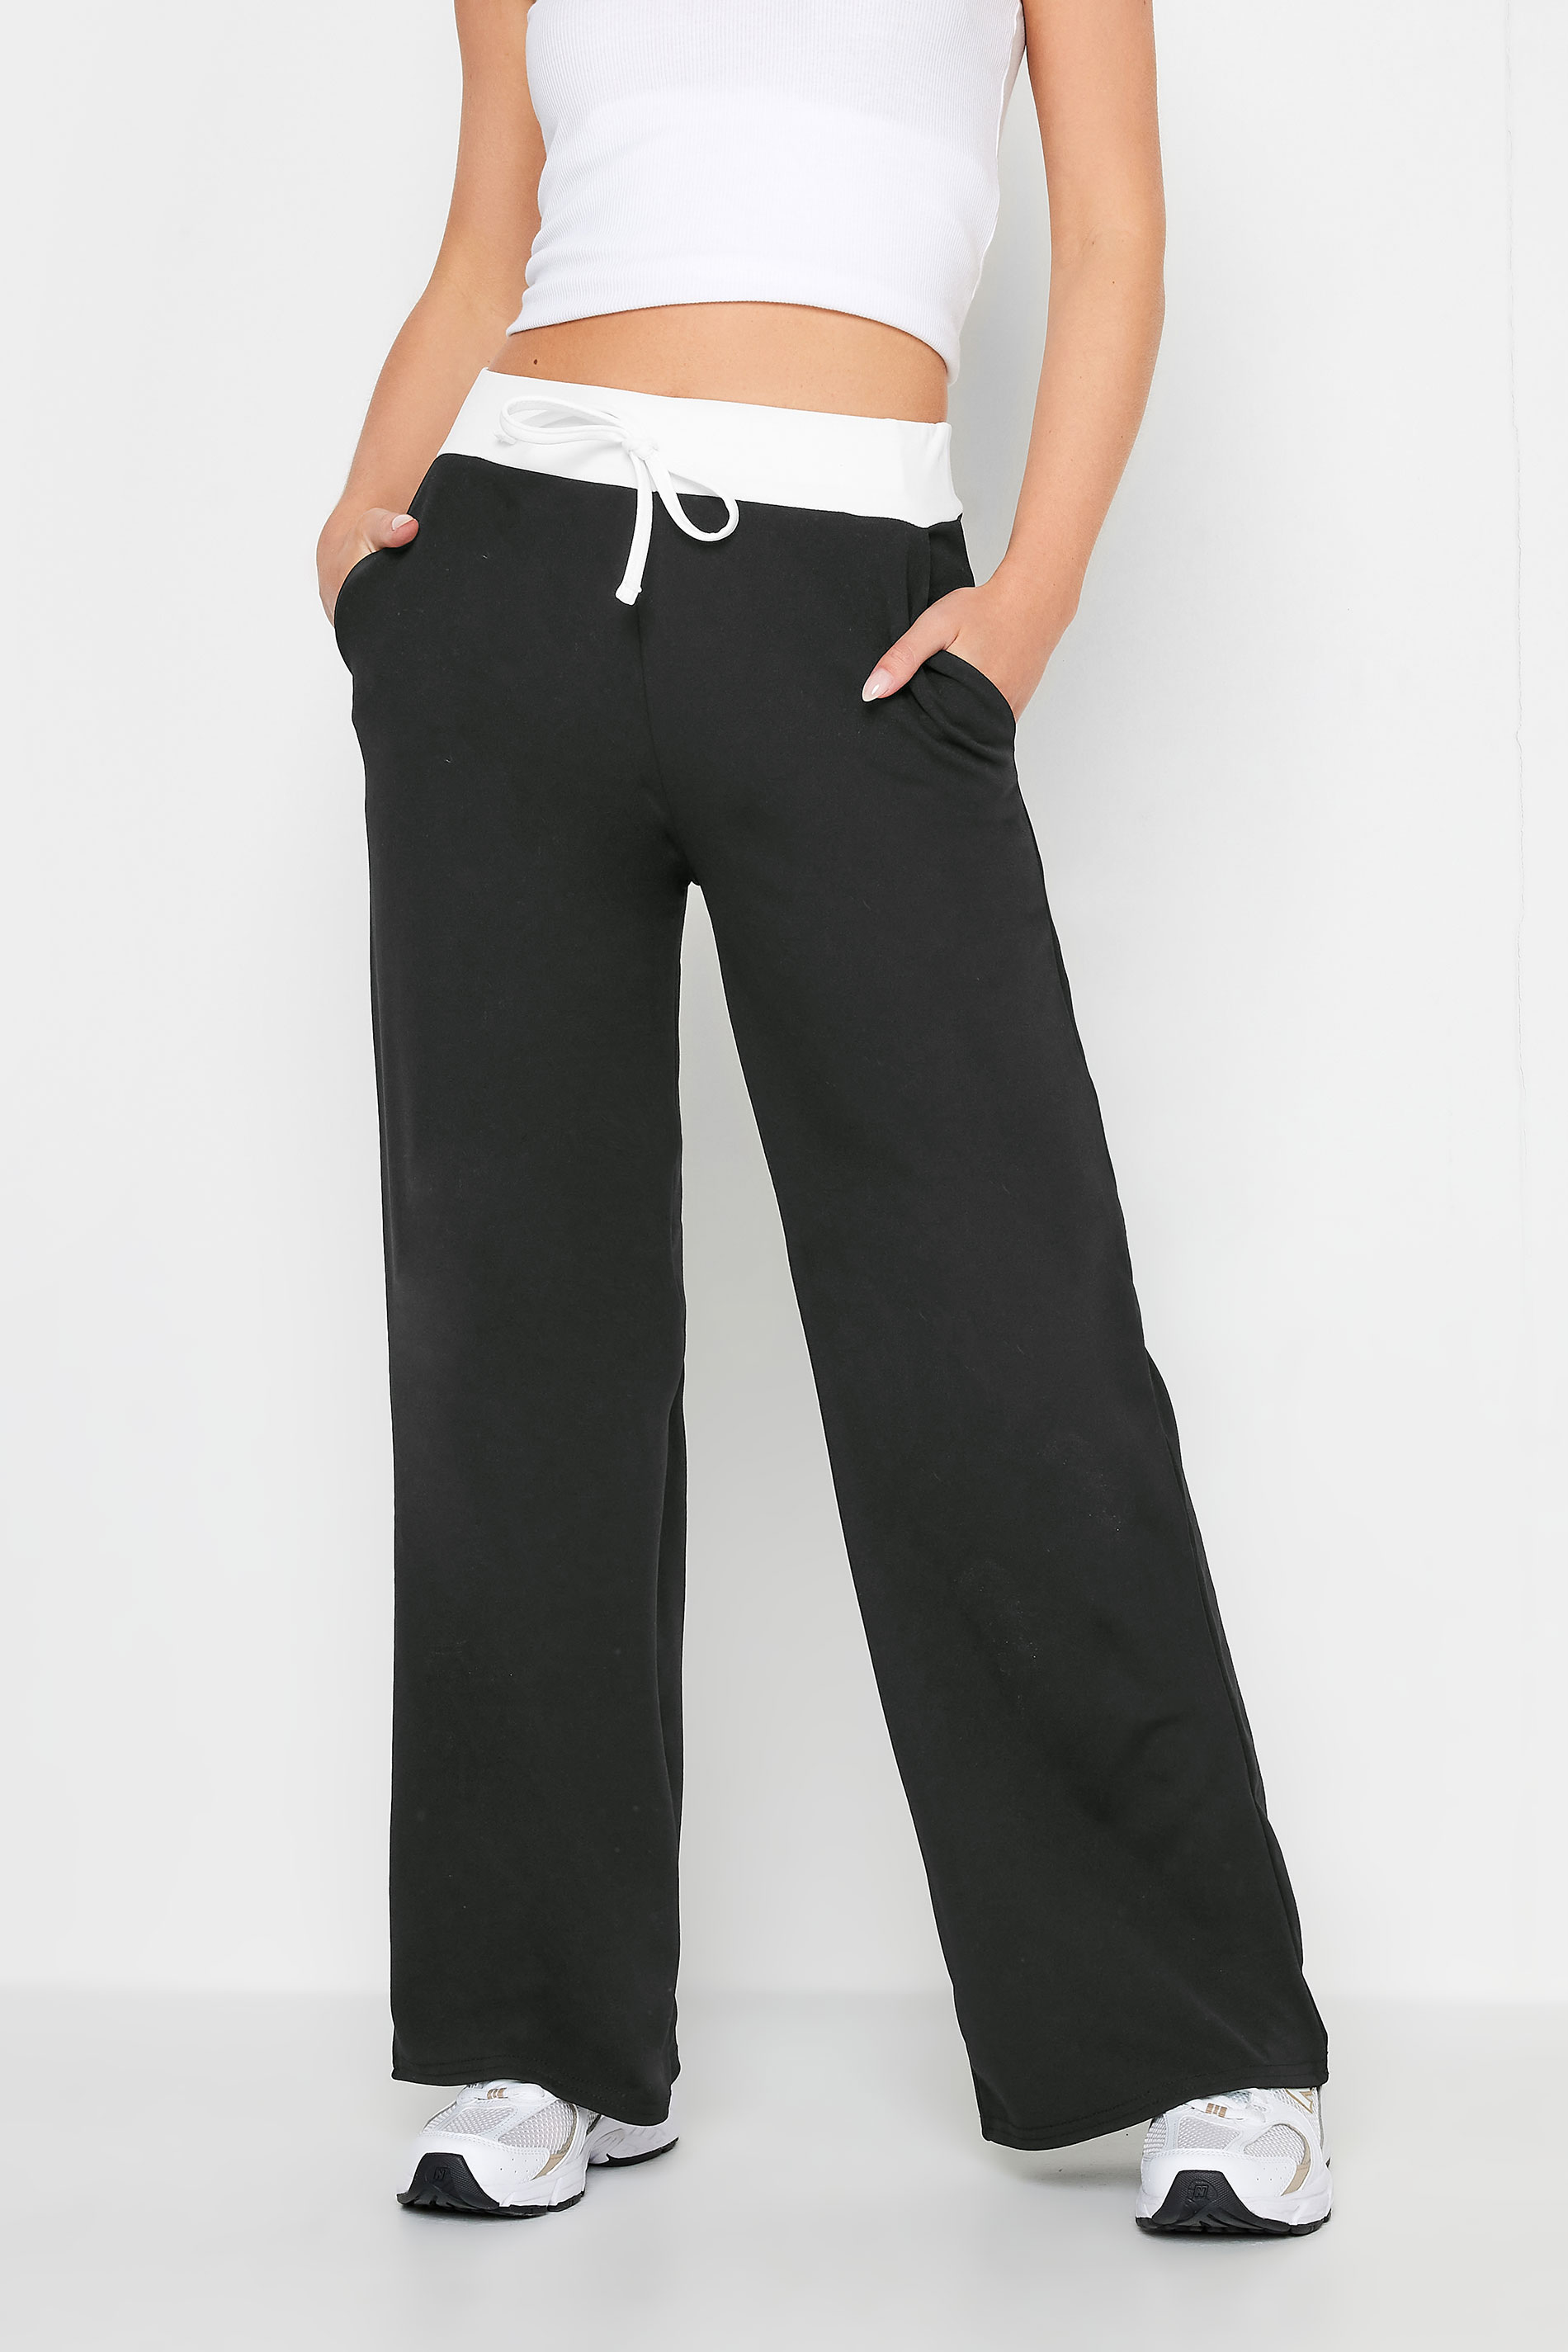 PixieGirl Petite Womens Black & White Contrast Trousers | PixieGirl